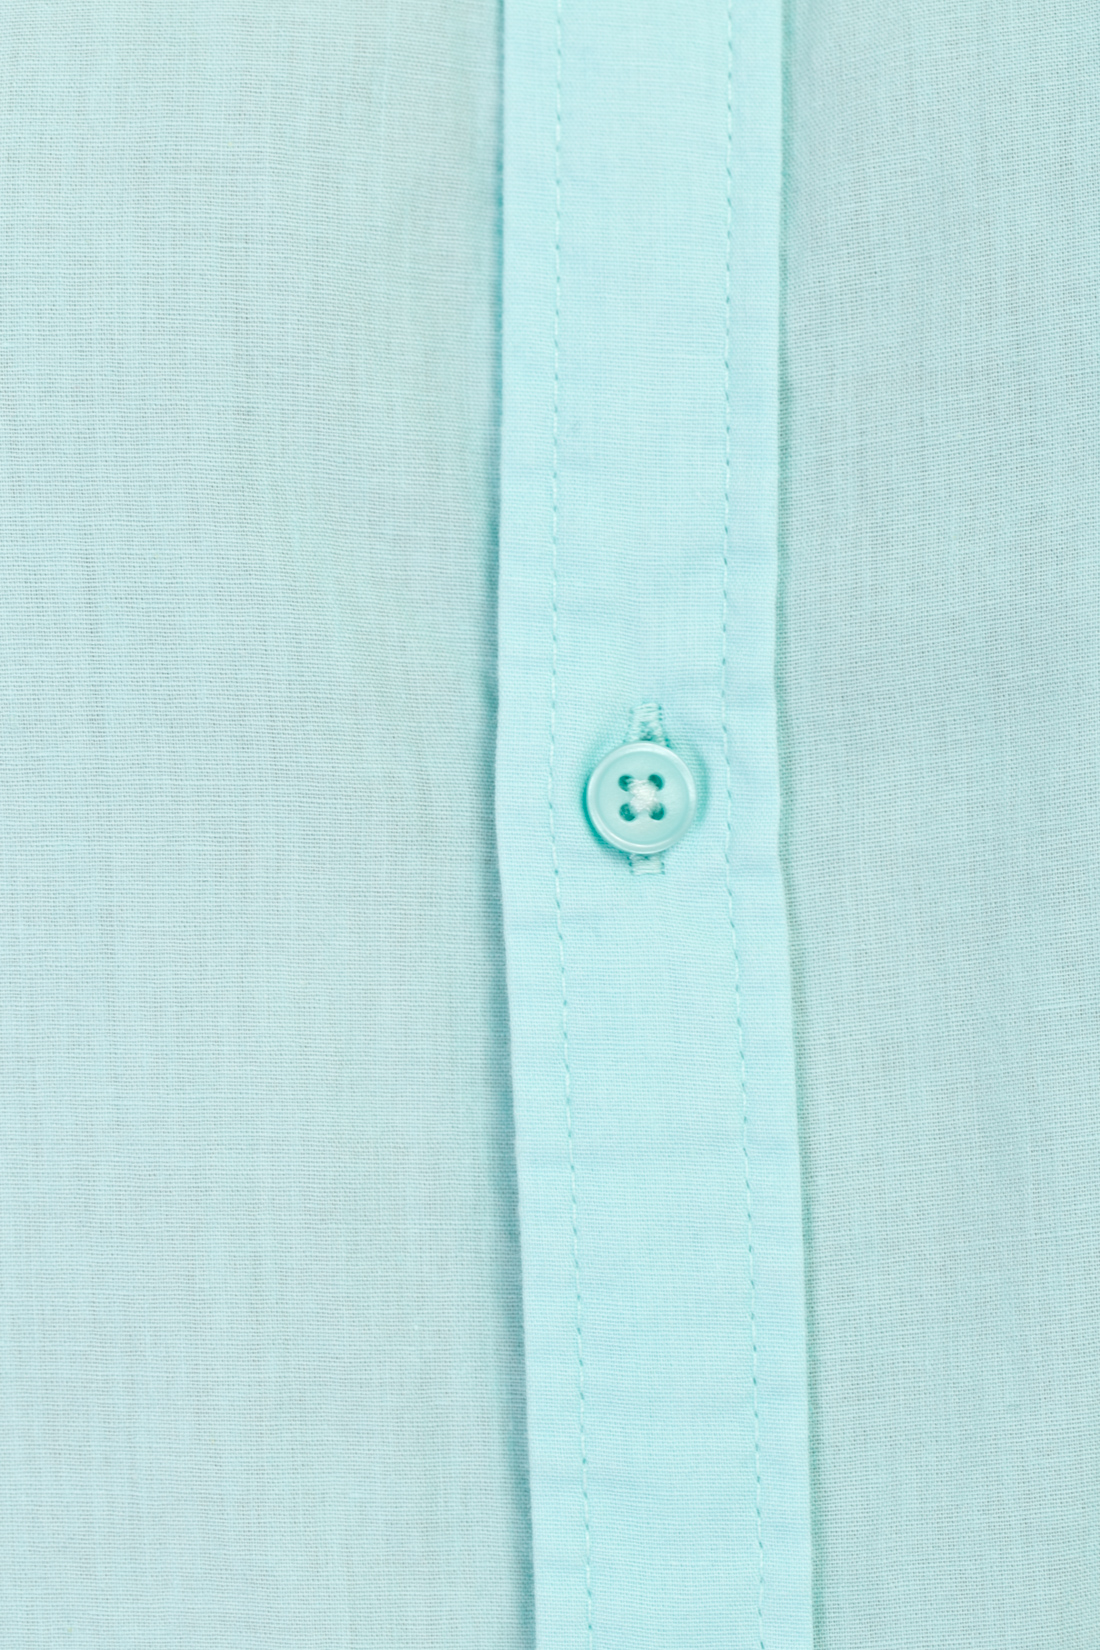 Базовая рубашка с коротким рукавом (арт. baon B687025), размер M, цвет голубой Базовая рубашка с коротким рукавом (арт. baon B687025) - фото 3